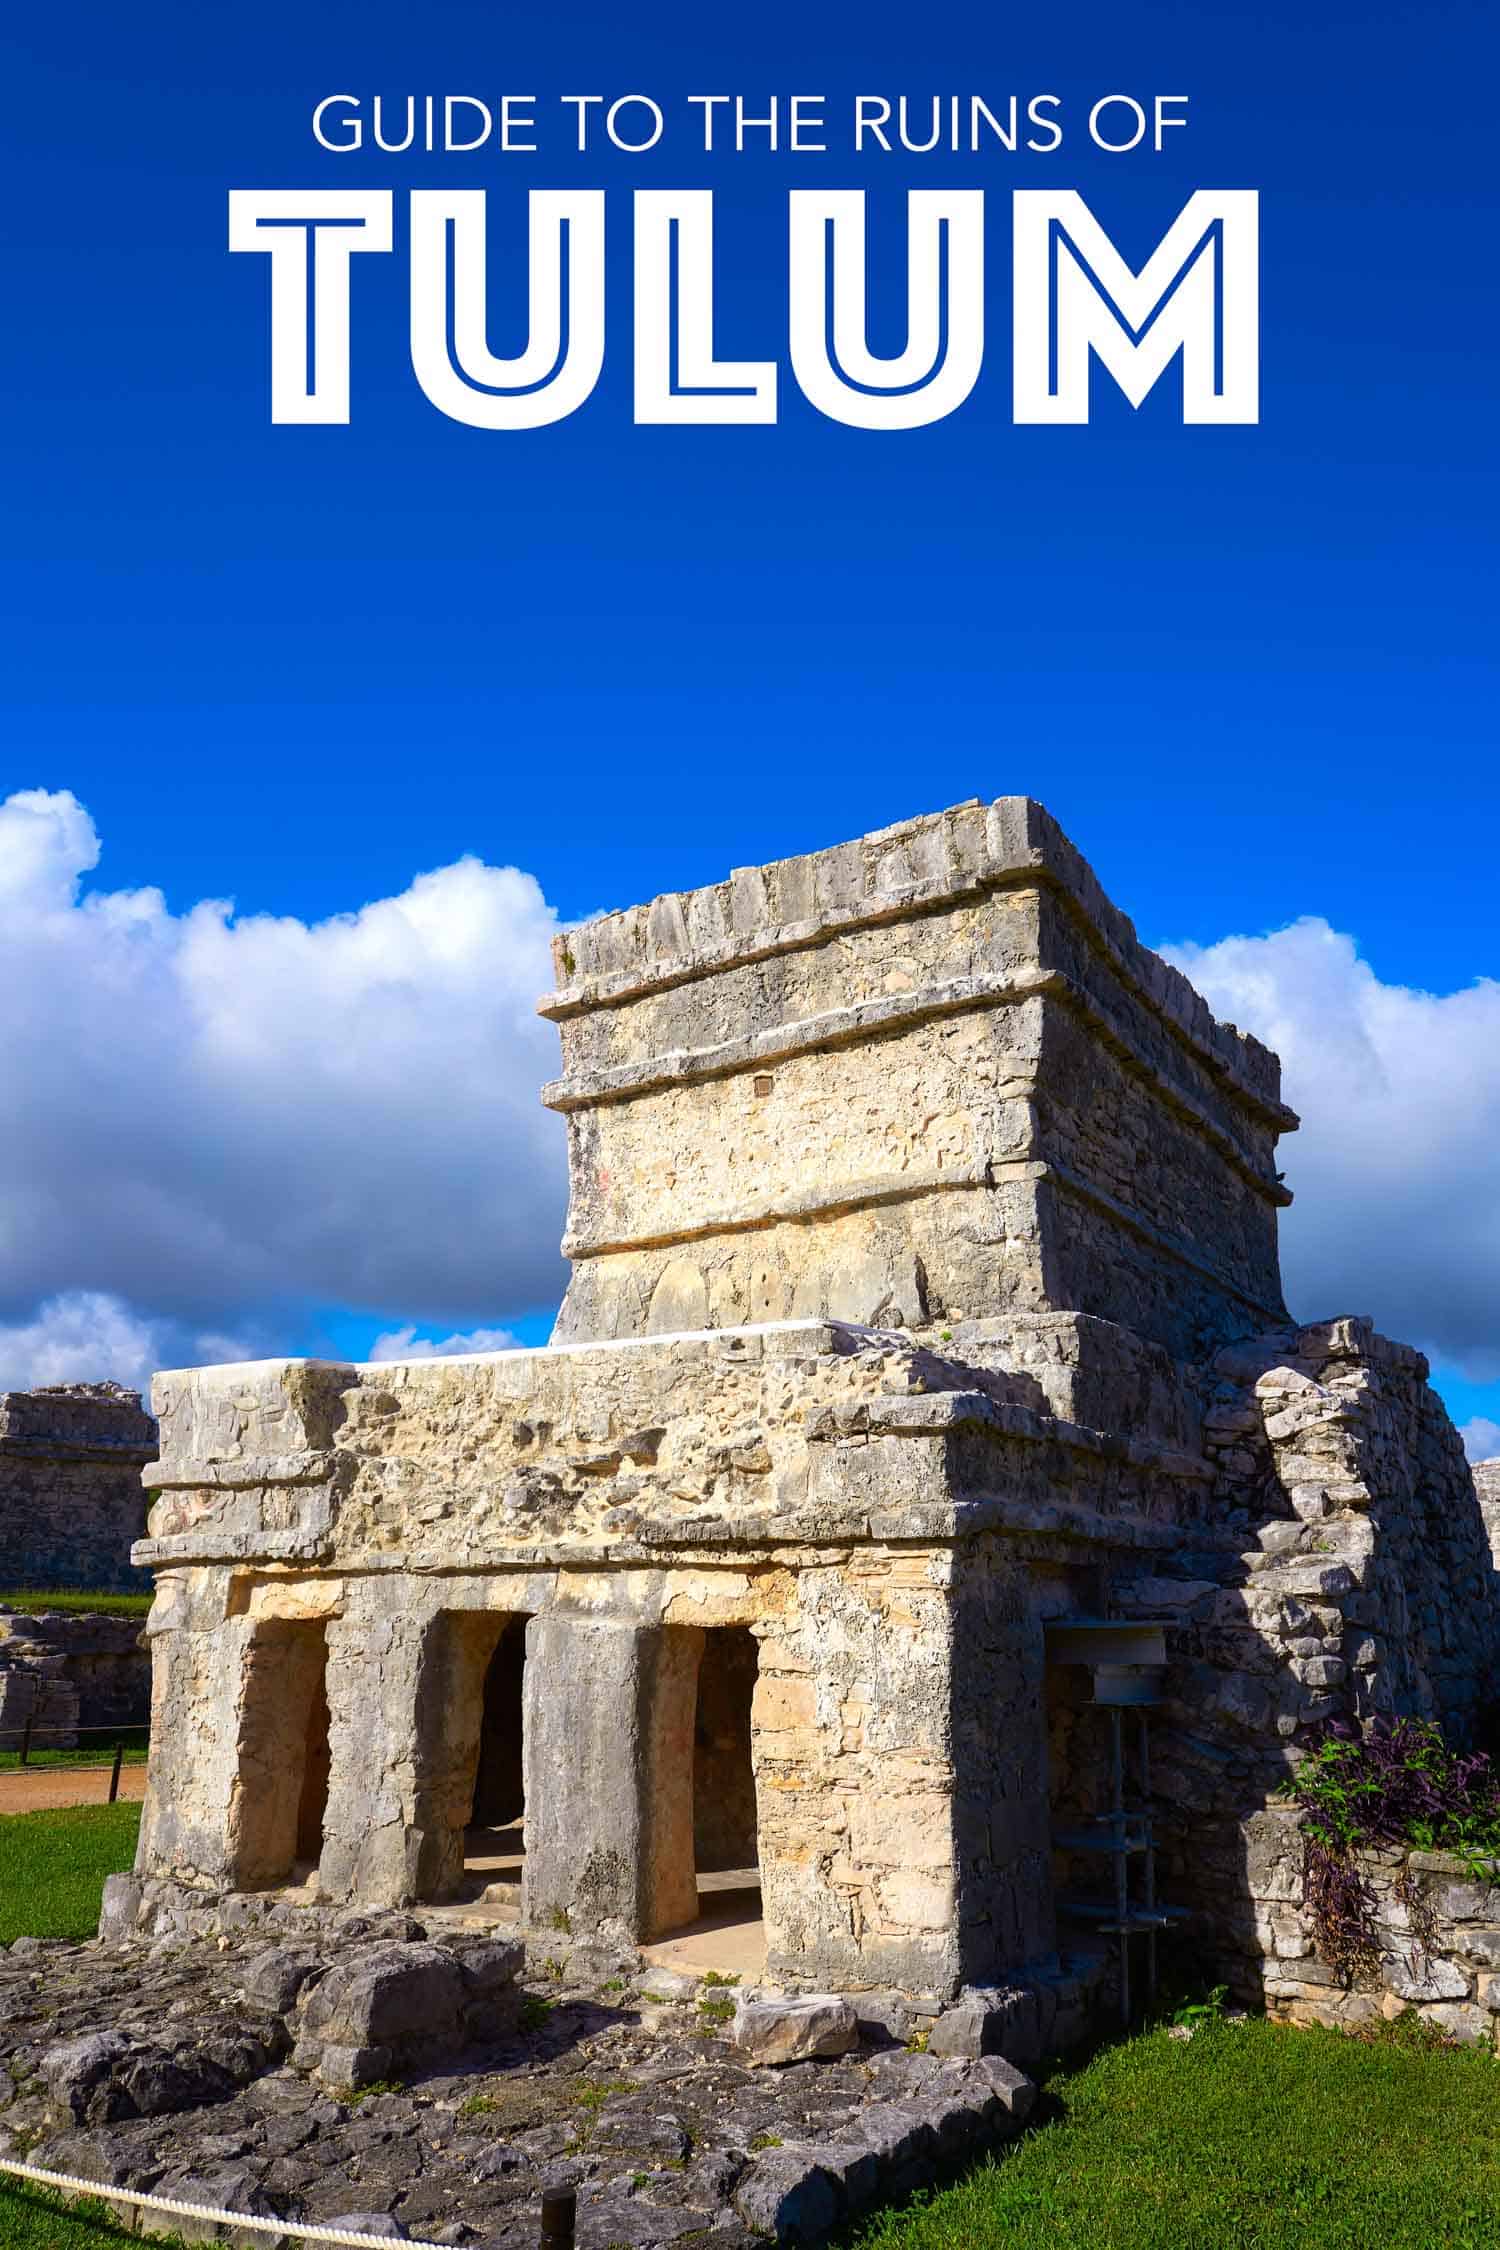 The ruins in Tulum Mexico